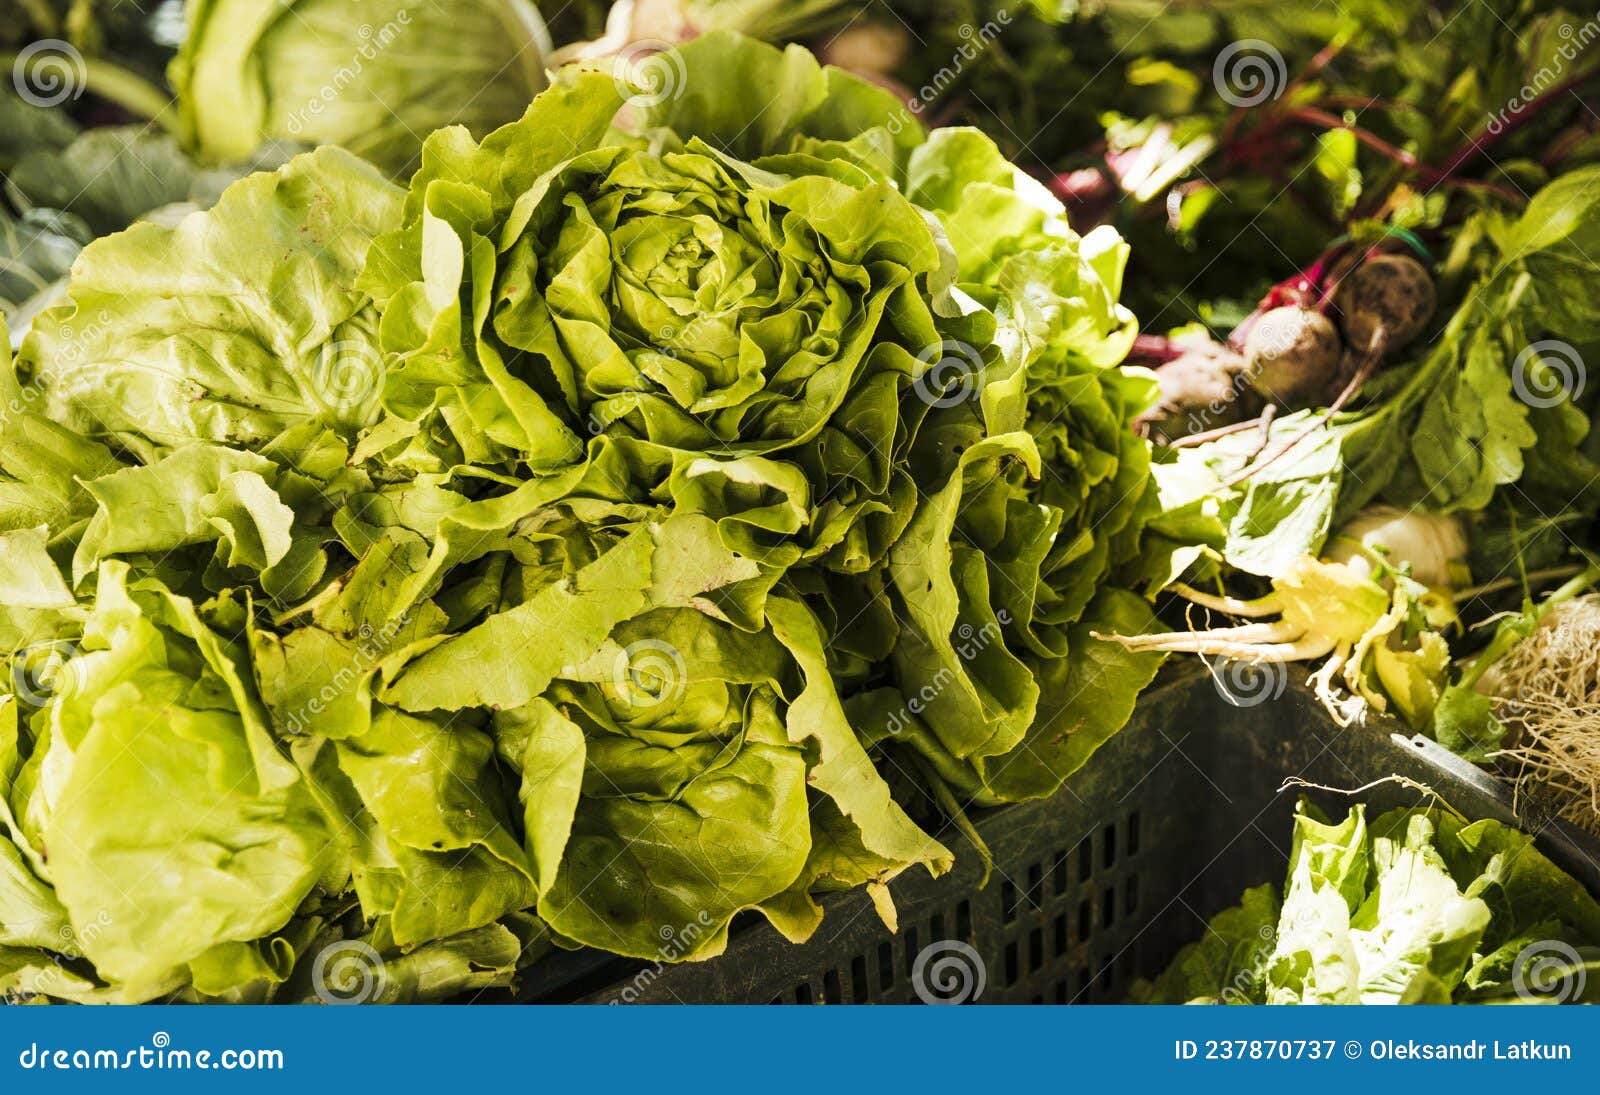 Butterhead Lettuce with Green Vegetables Market Stall Organic Farmers ...